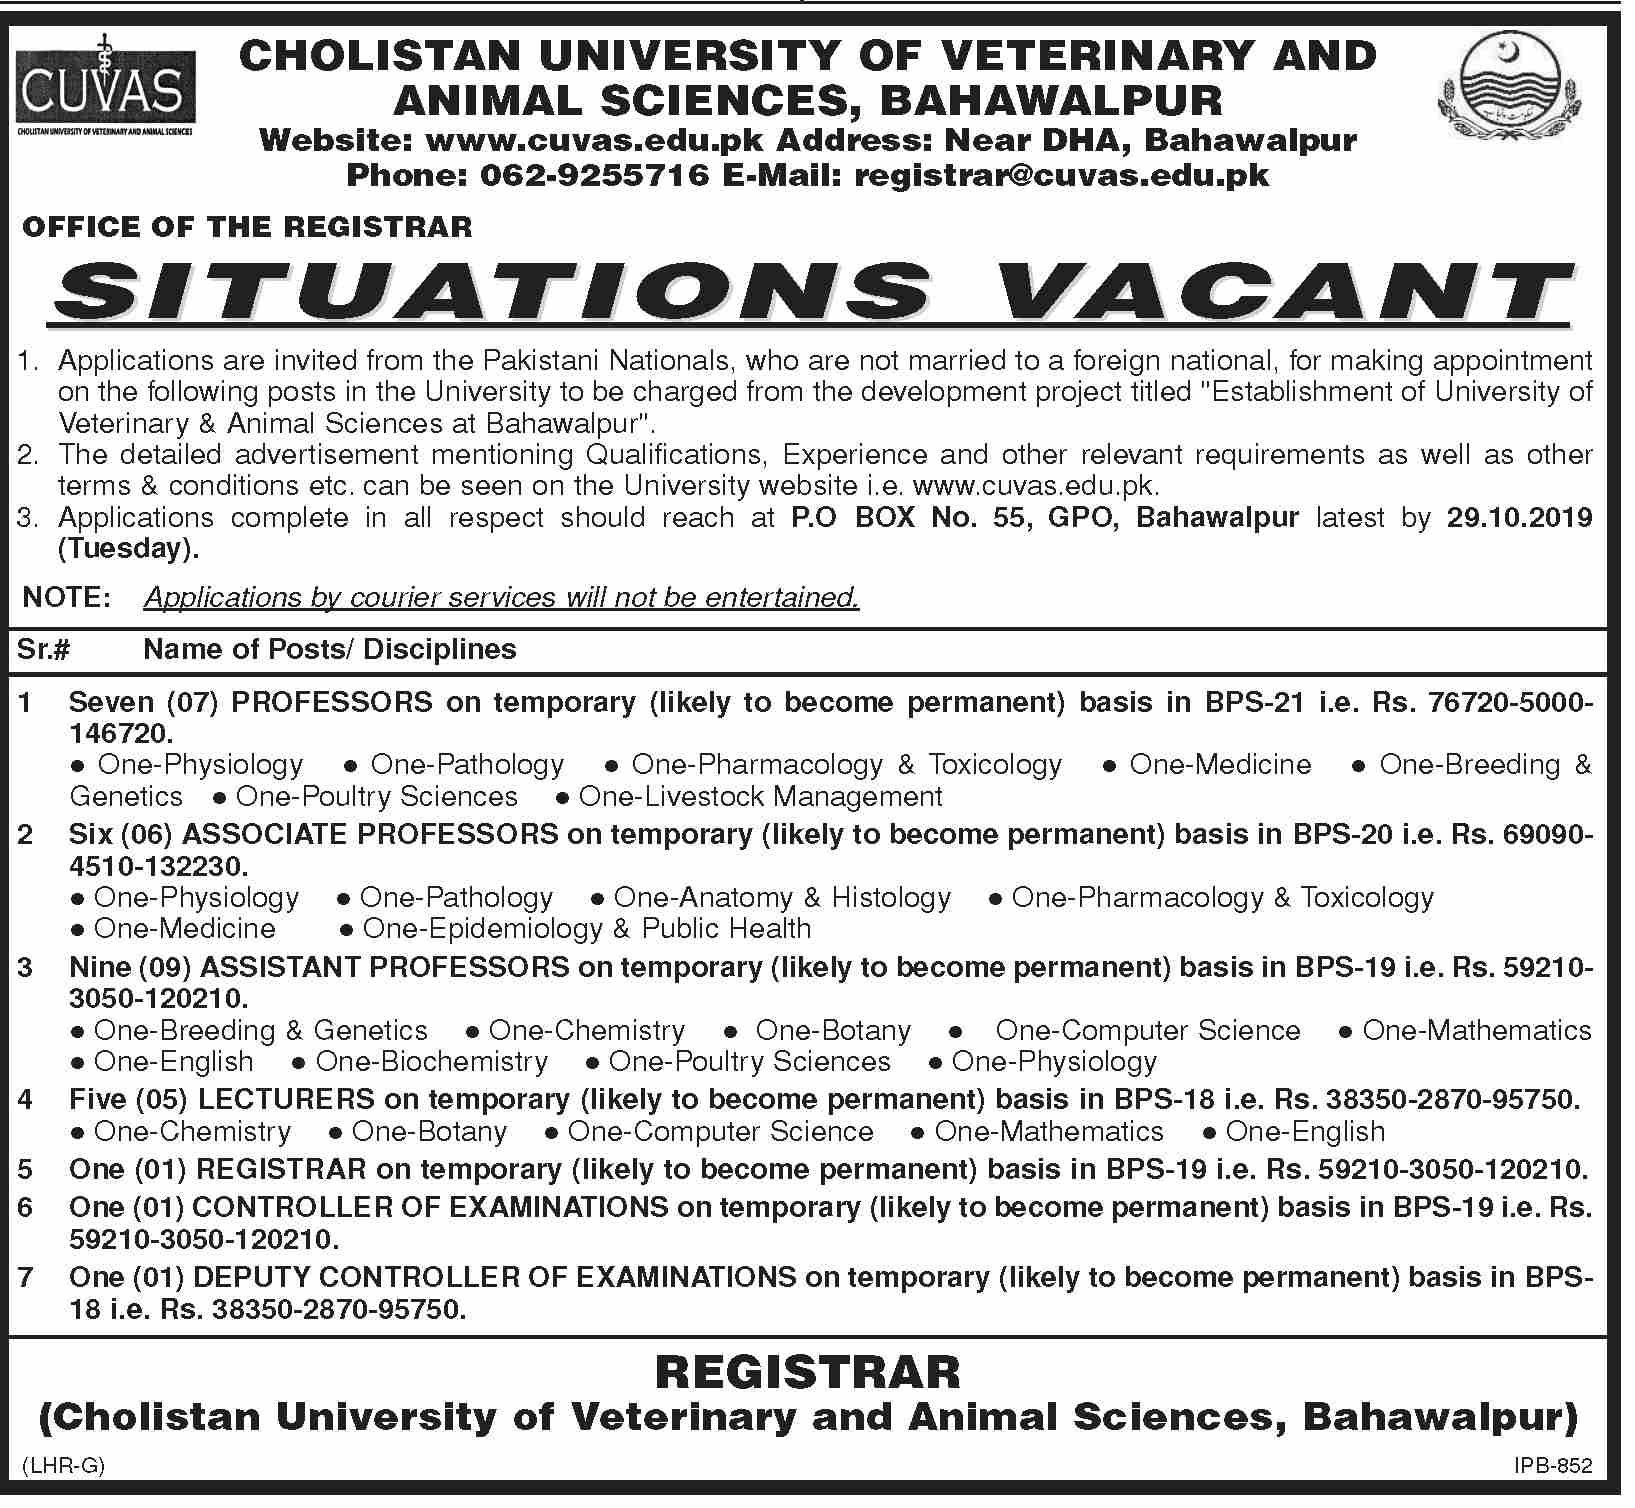 Cholistan University Of Veterinary And Animal Sciences Bahawalpur CUVAS Jobs  10 October 2019 - Prepistan Jobs